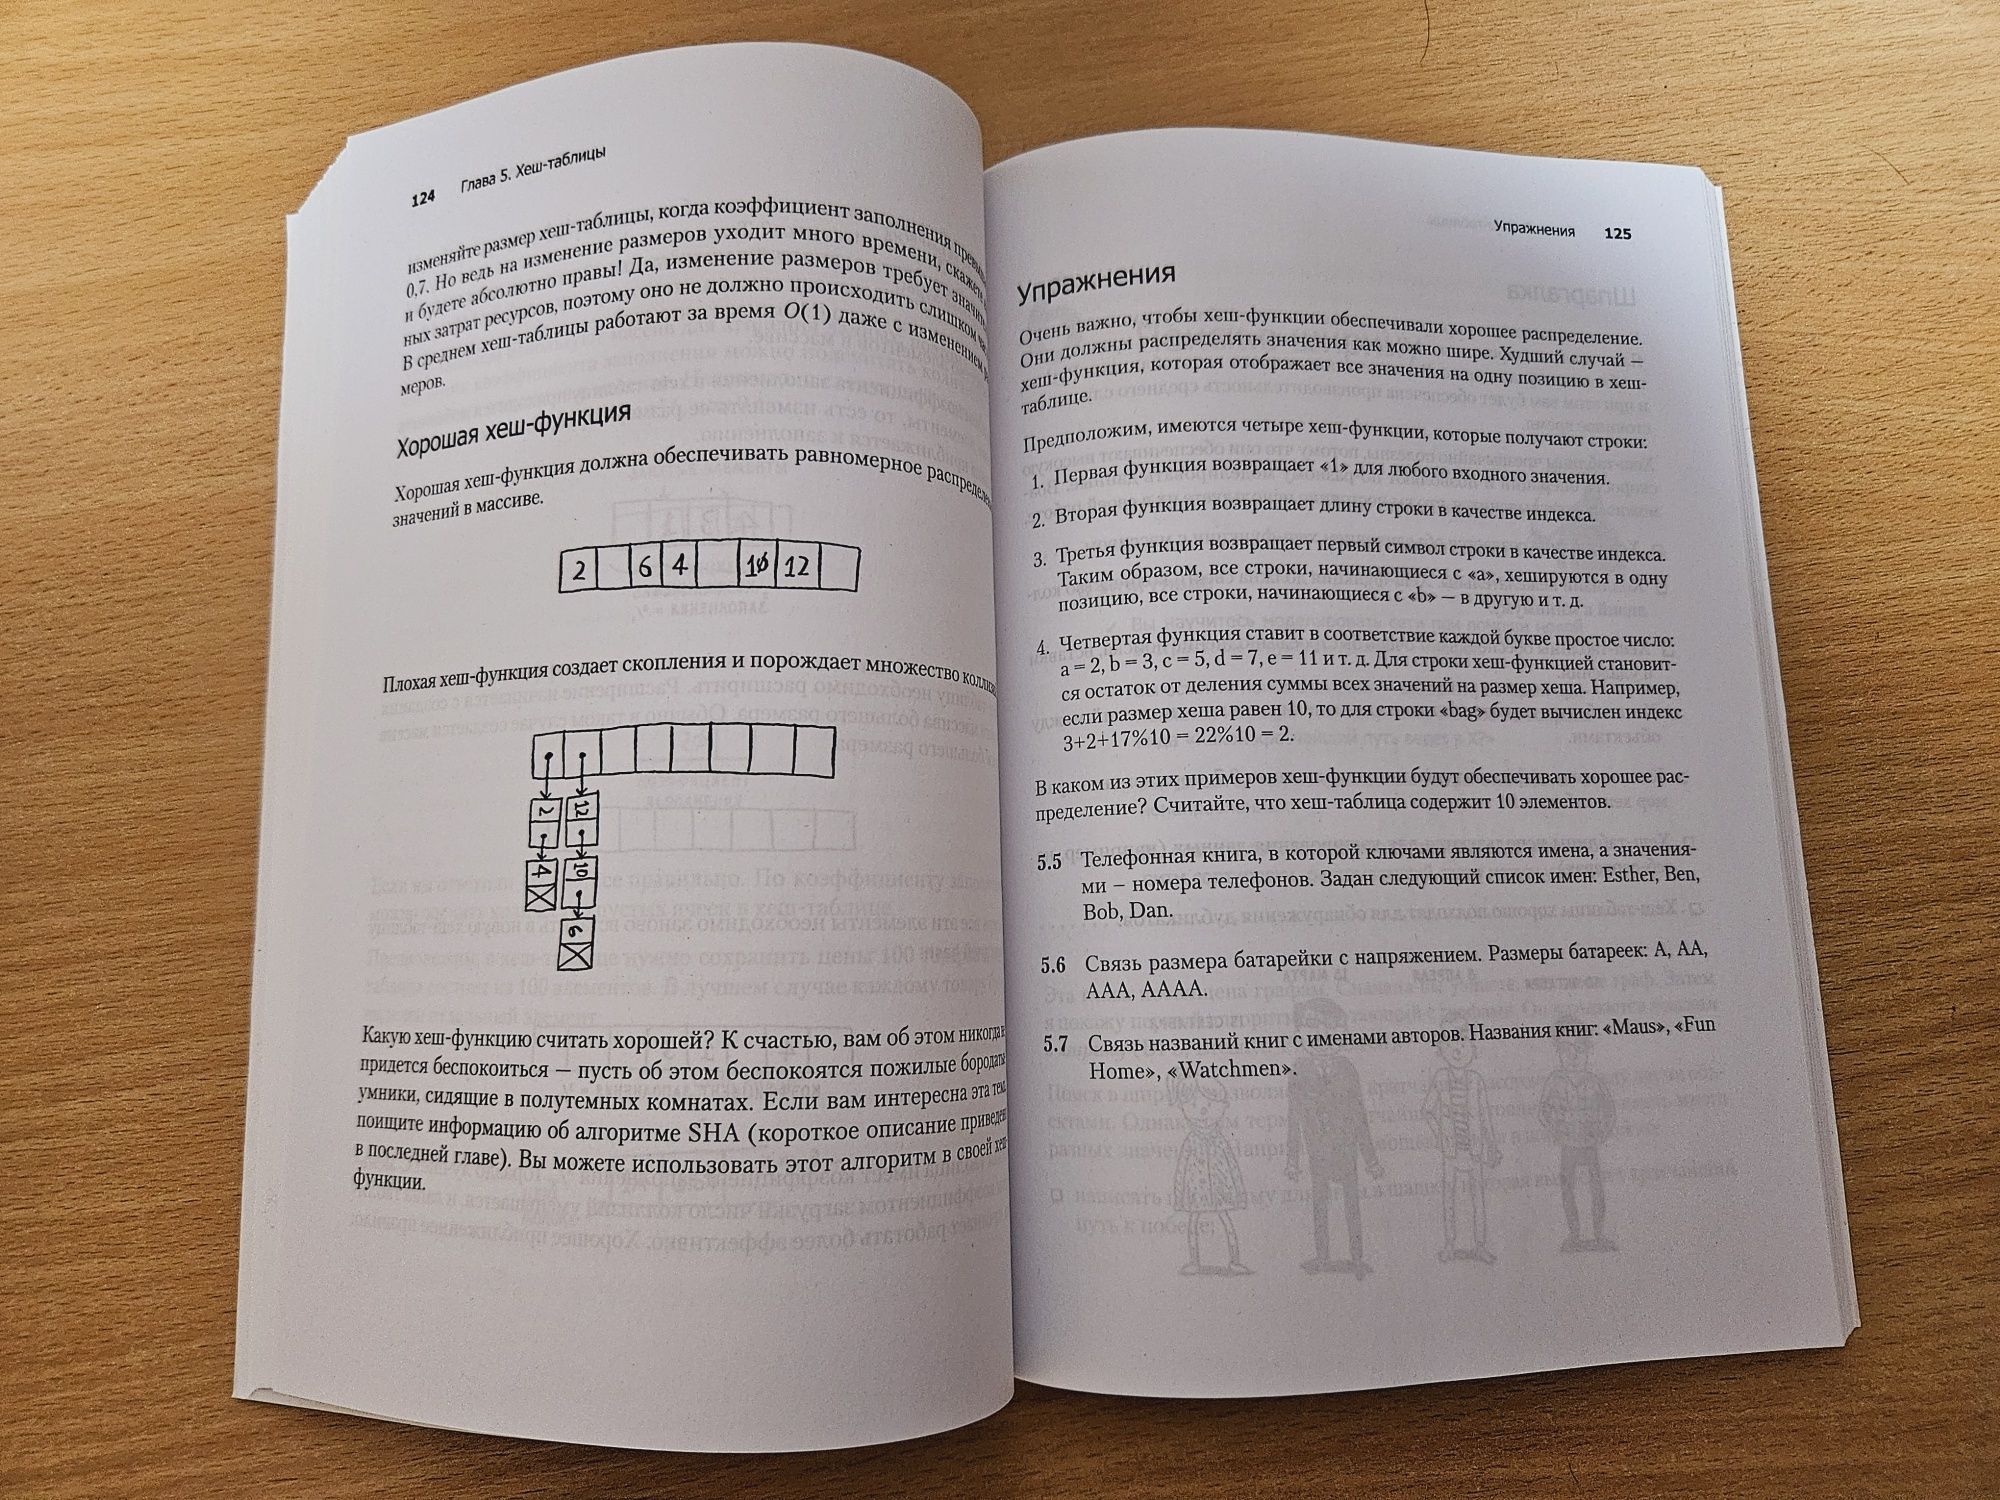 Книга "Грокаем алгоритмы"